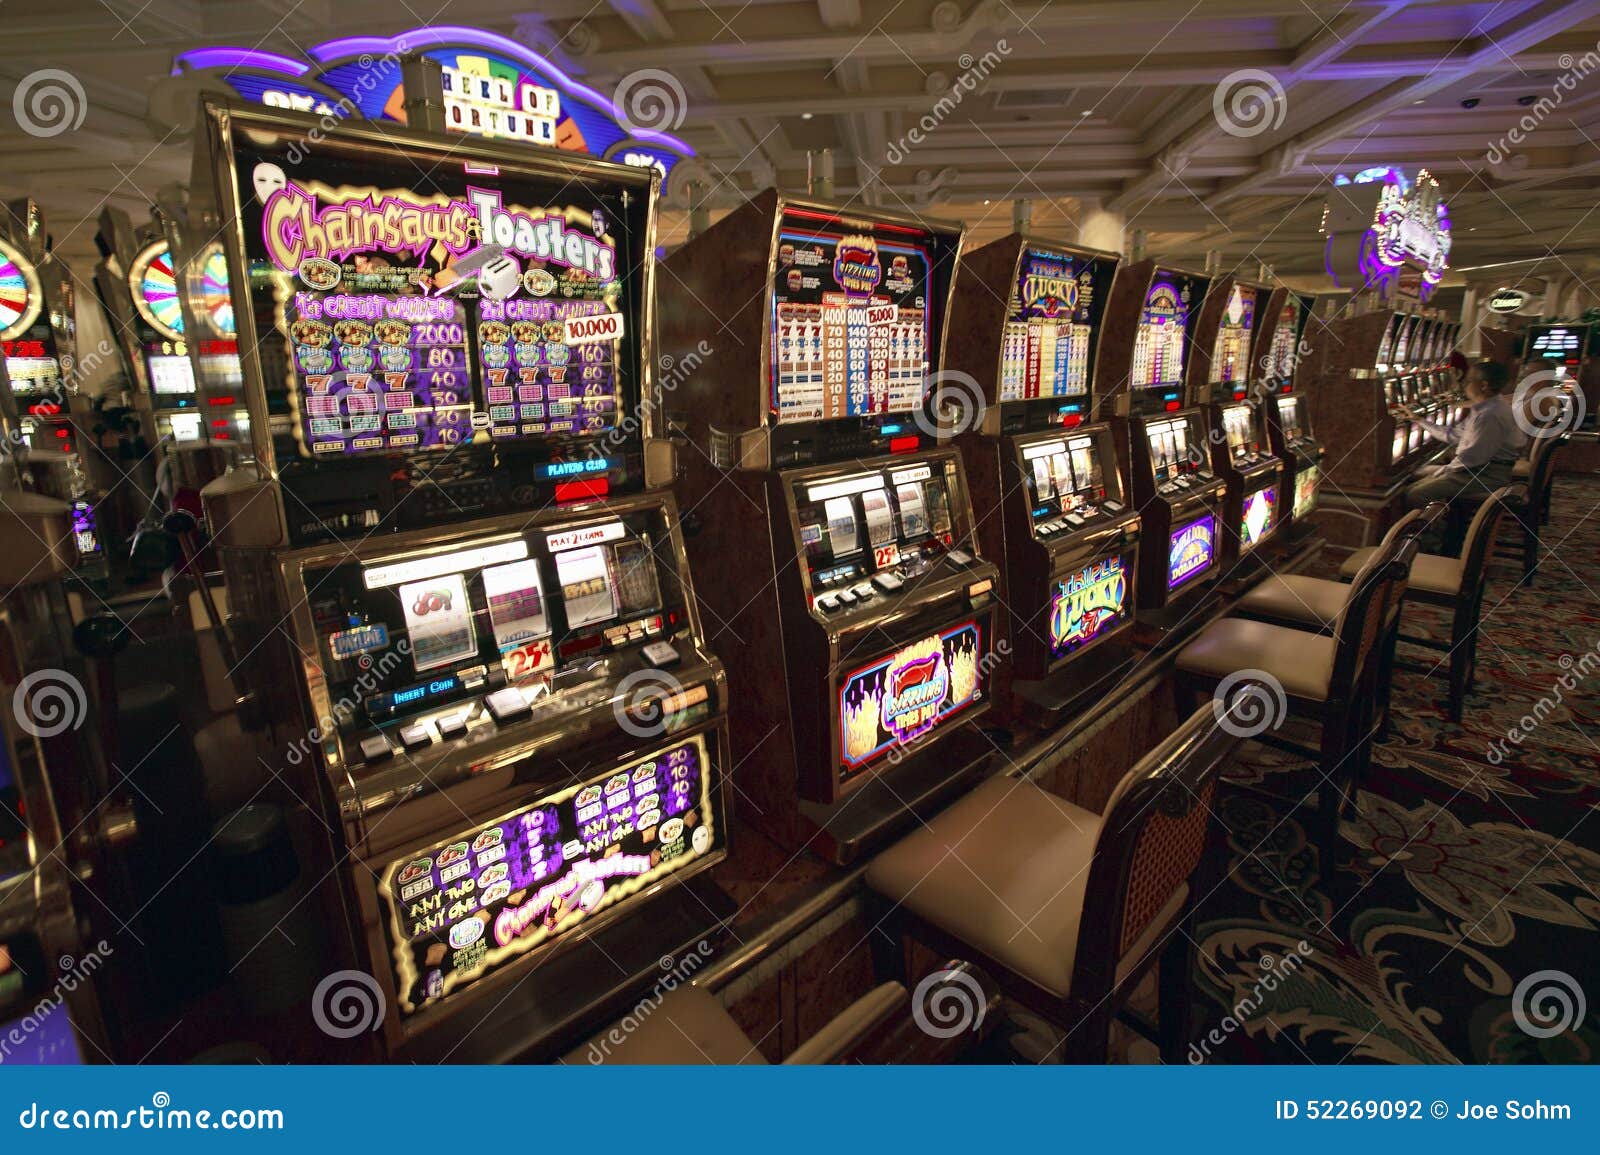 Anaheim Casinos With Slot Machines